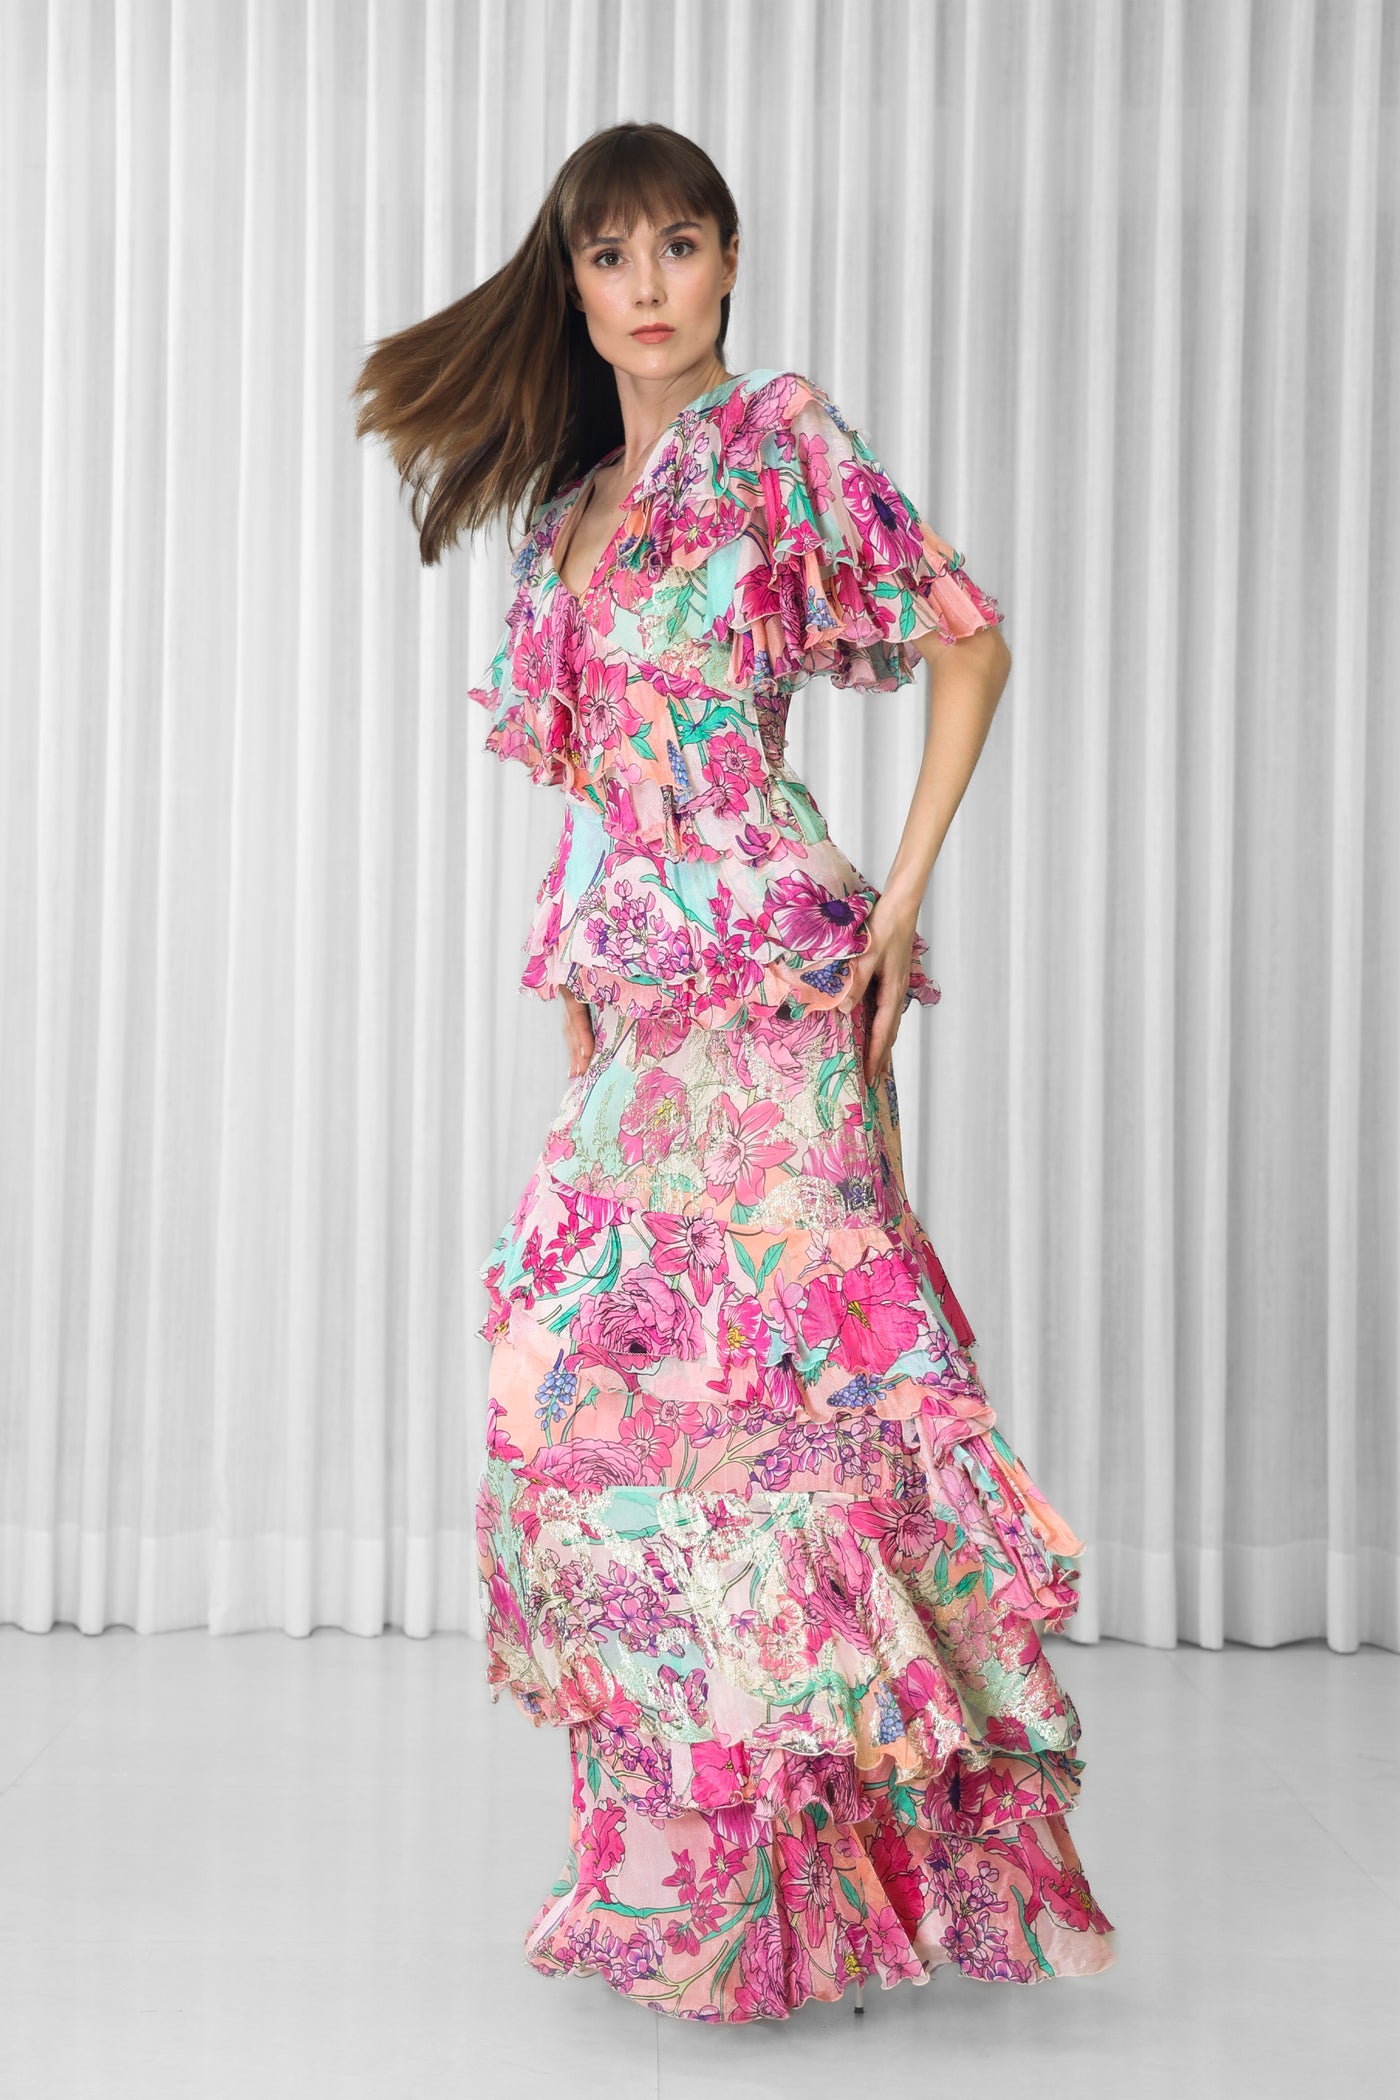 Mandira Wirk Hibiscus Printed Brasso and Chiffon Ruffled Dress indian designer wear online shopping melange singapore